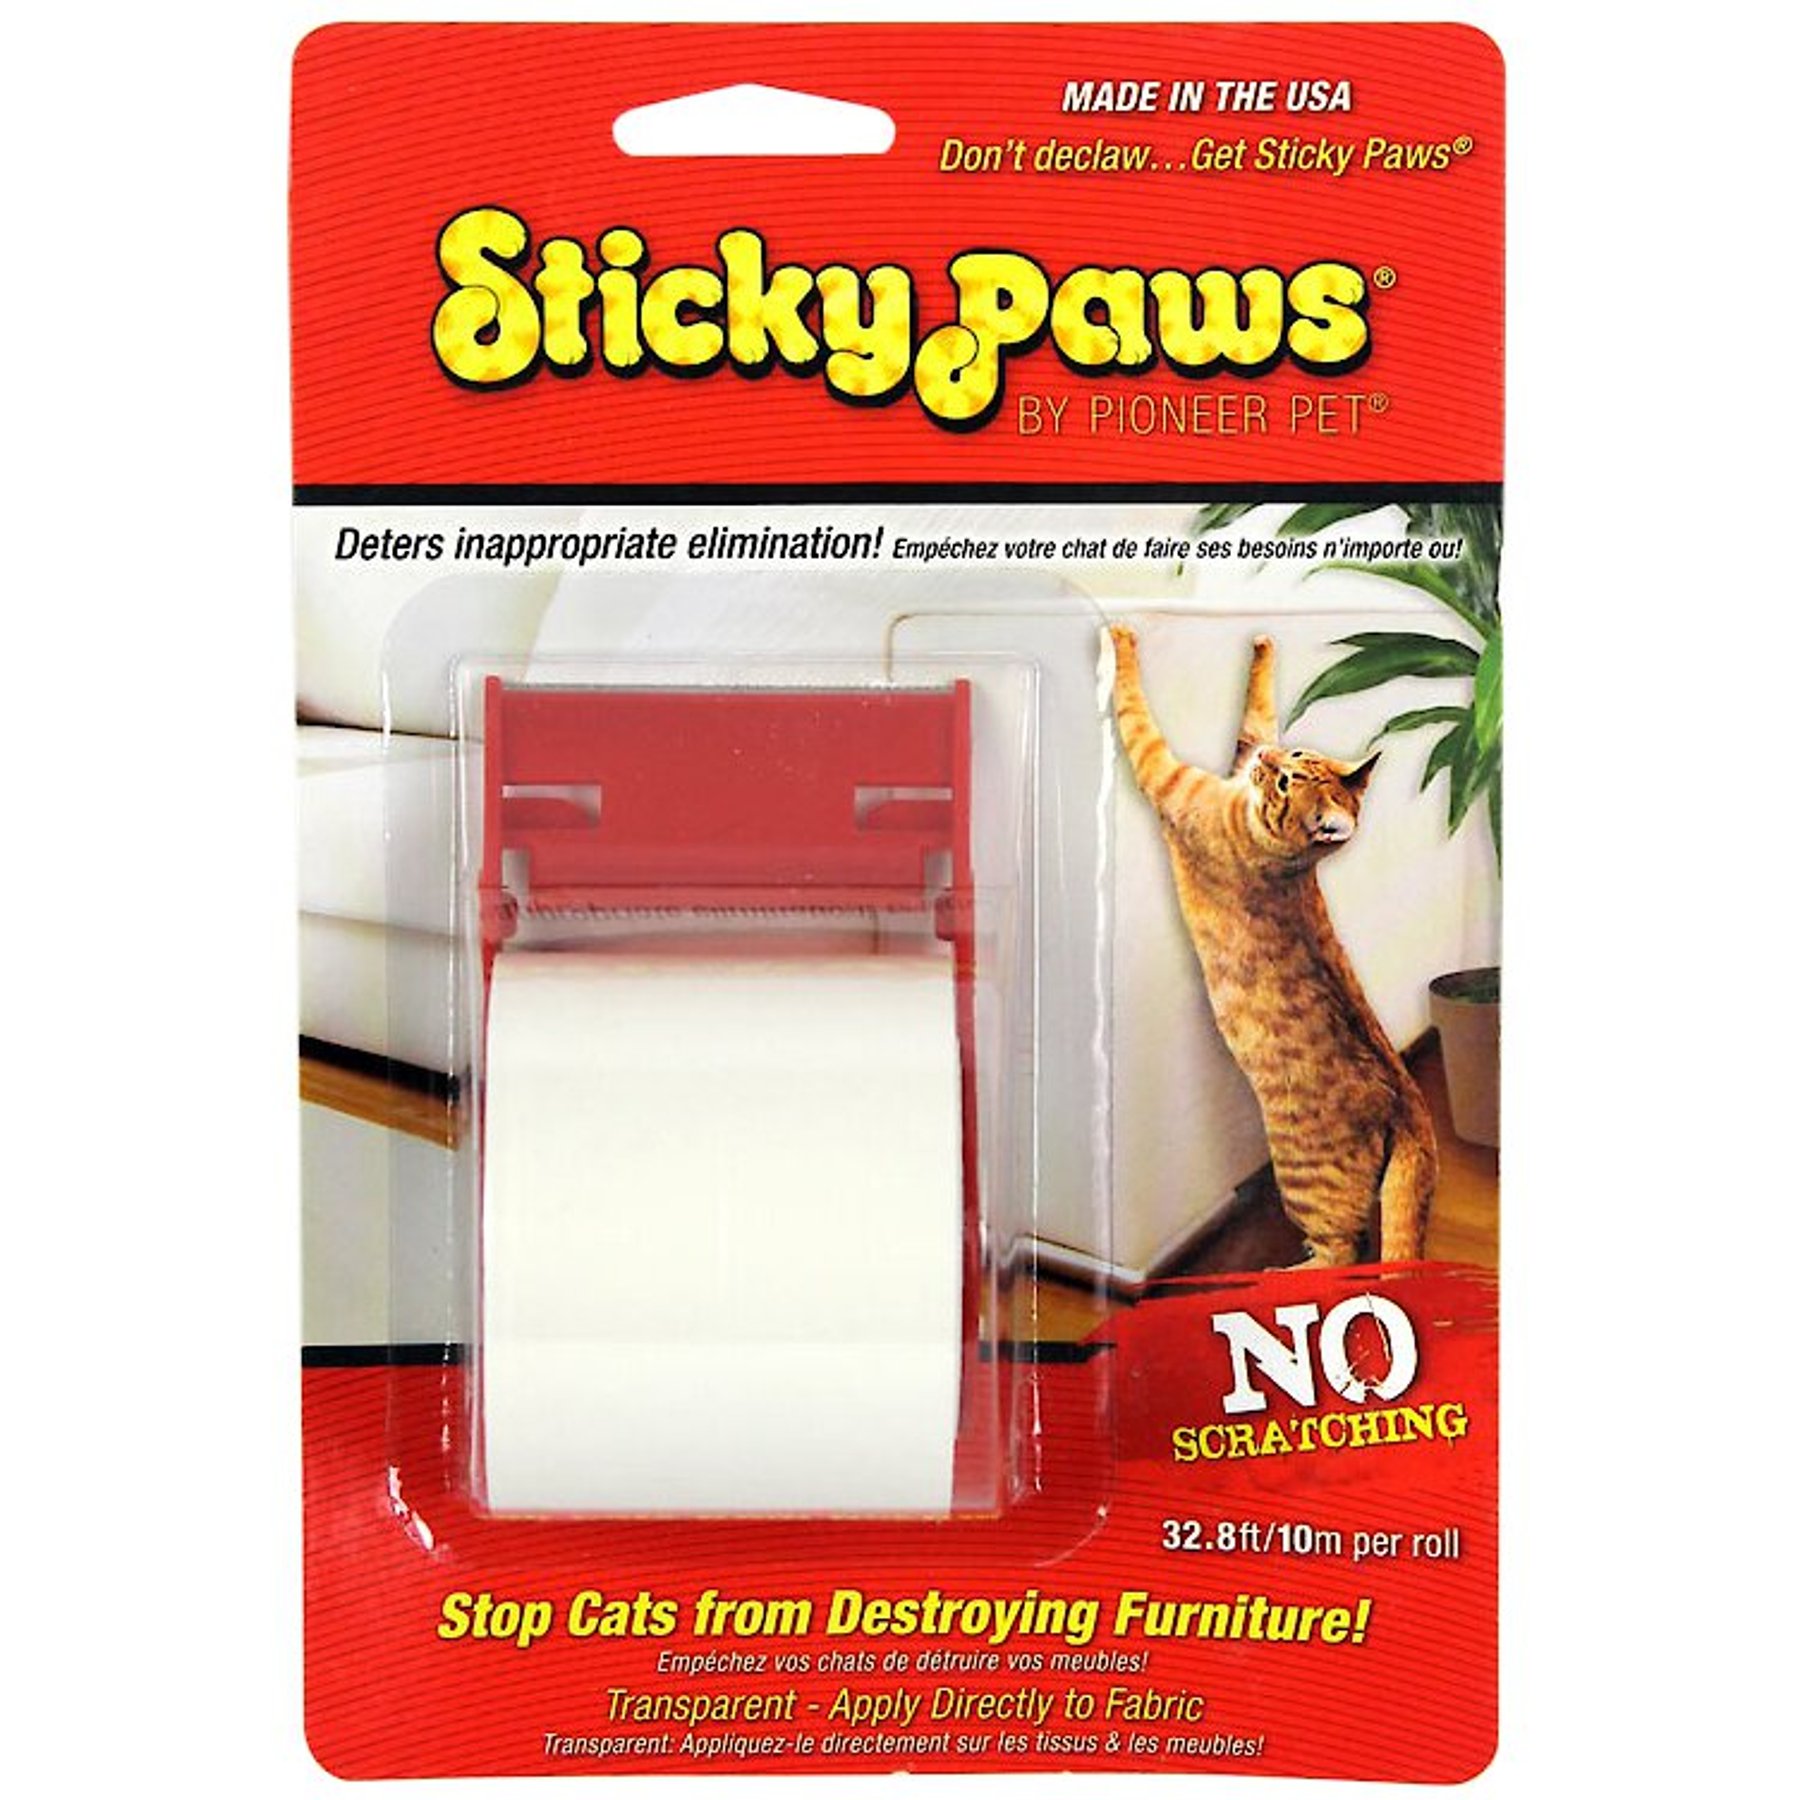 ALL FOR PAWS Cat Multiple Feeder, Polypropylene, 20 oz